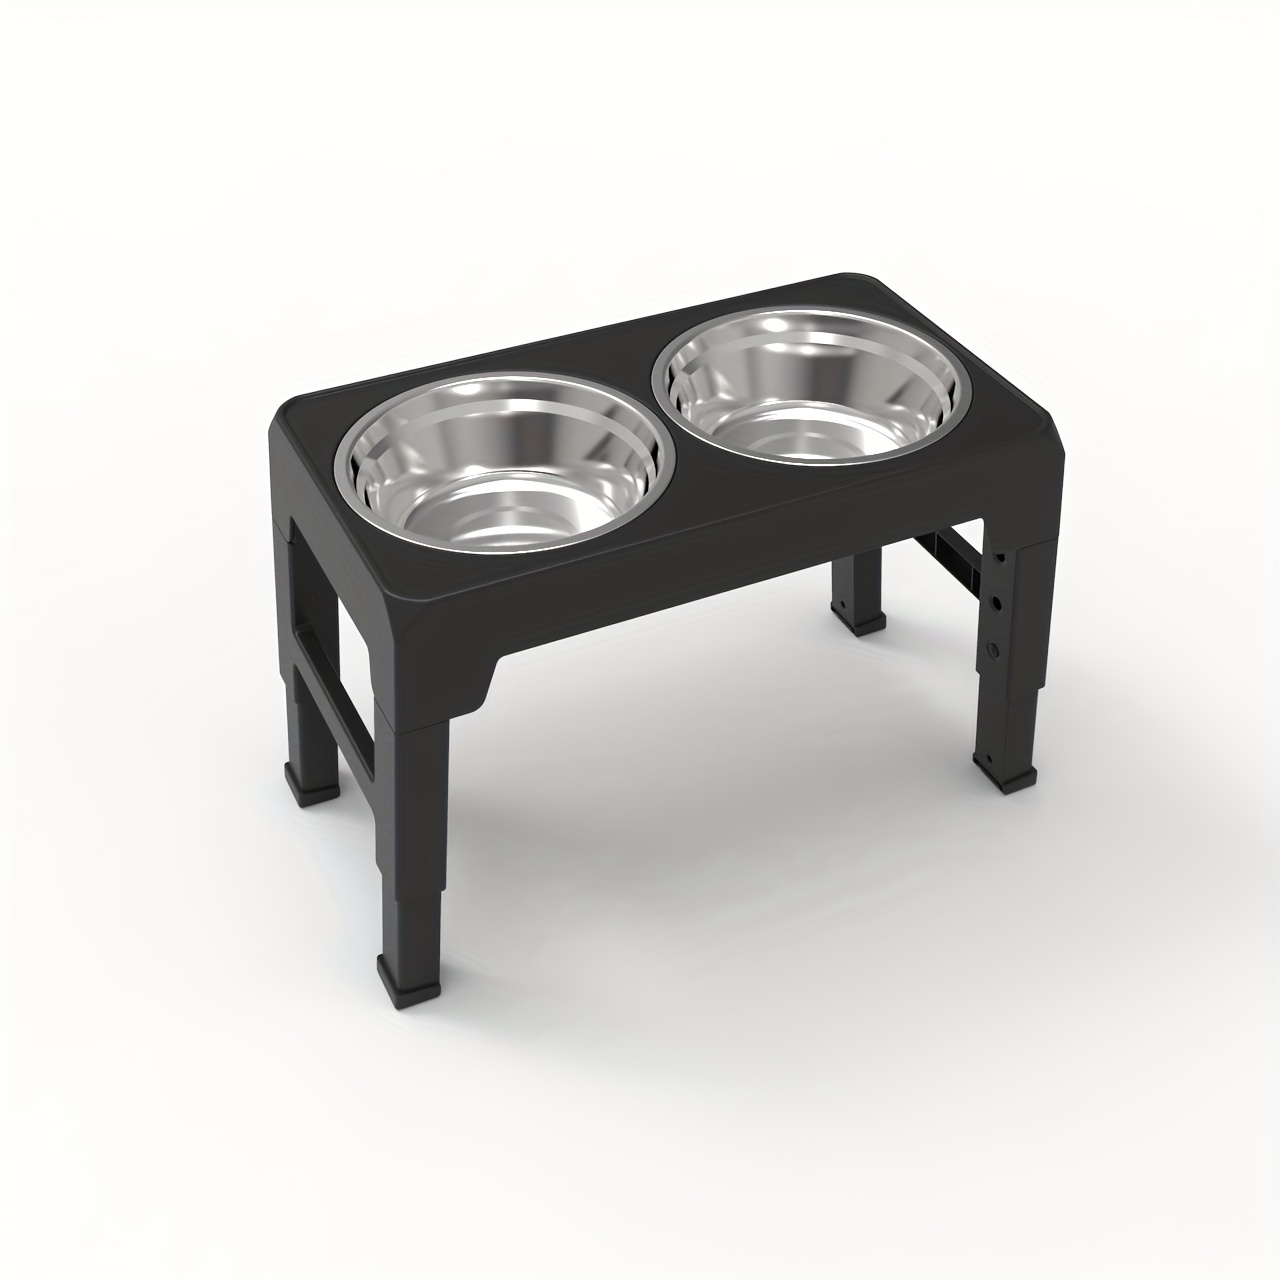 Elevated Dog Double Bowls, 4 Heights Adjustable Raised Dog Bowl